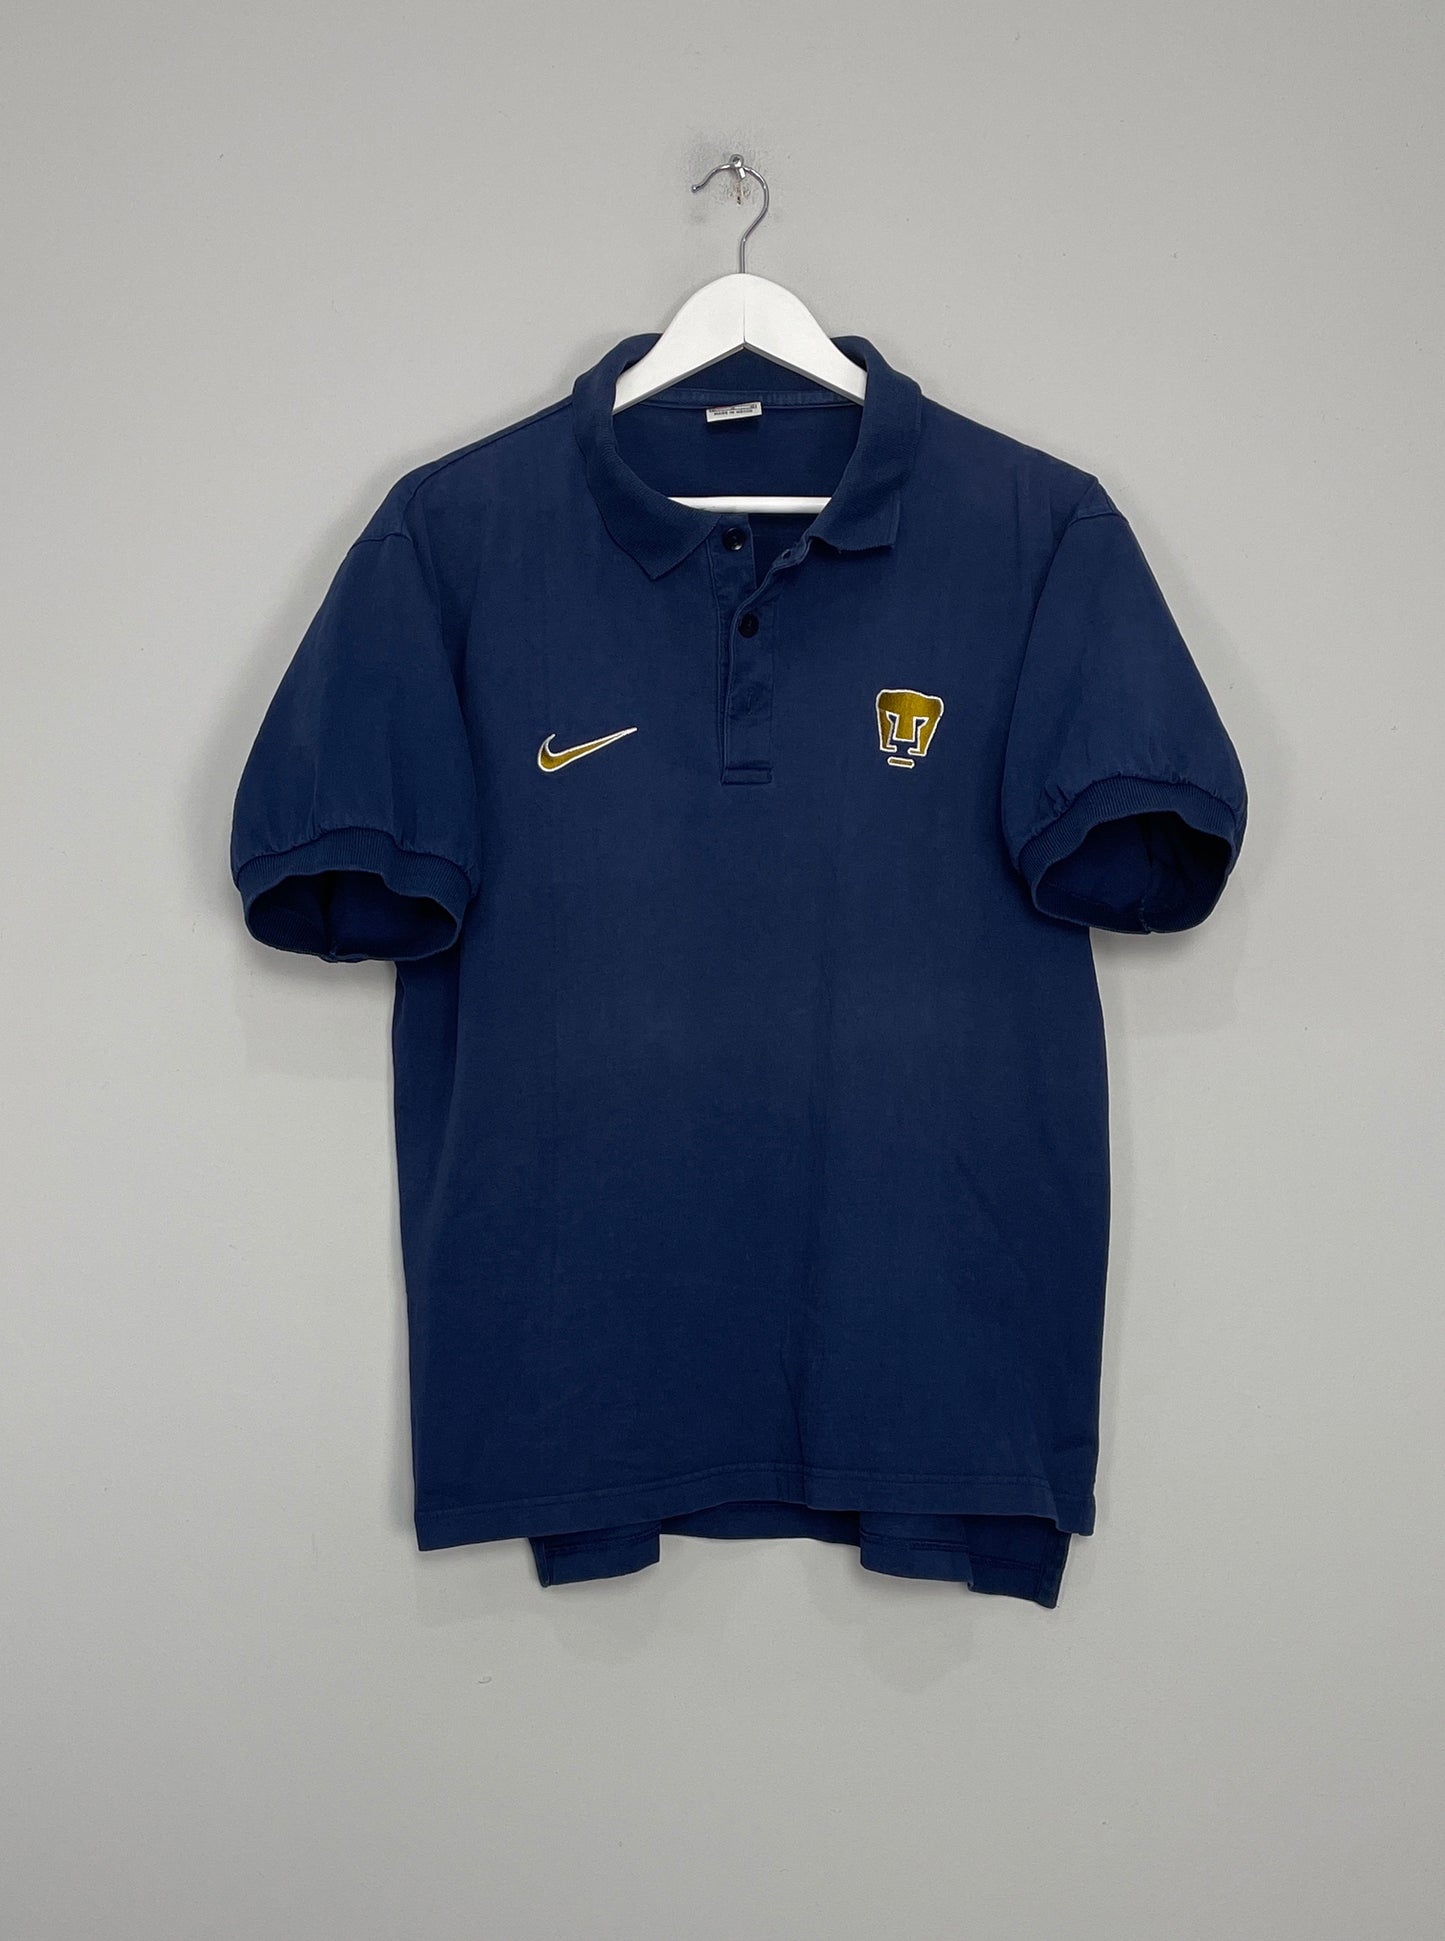 Image of the Unam Pumas shirt from the 2001/02 season